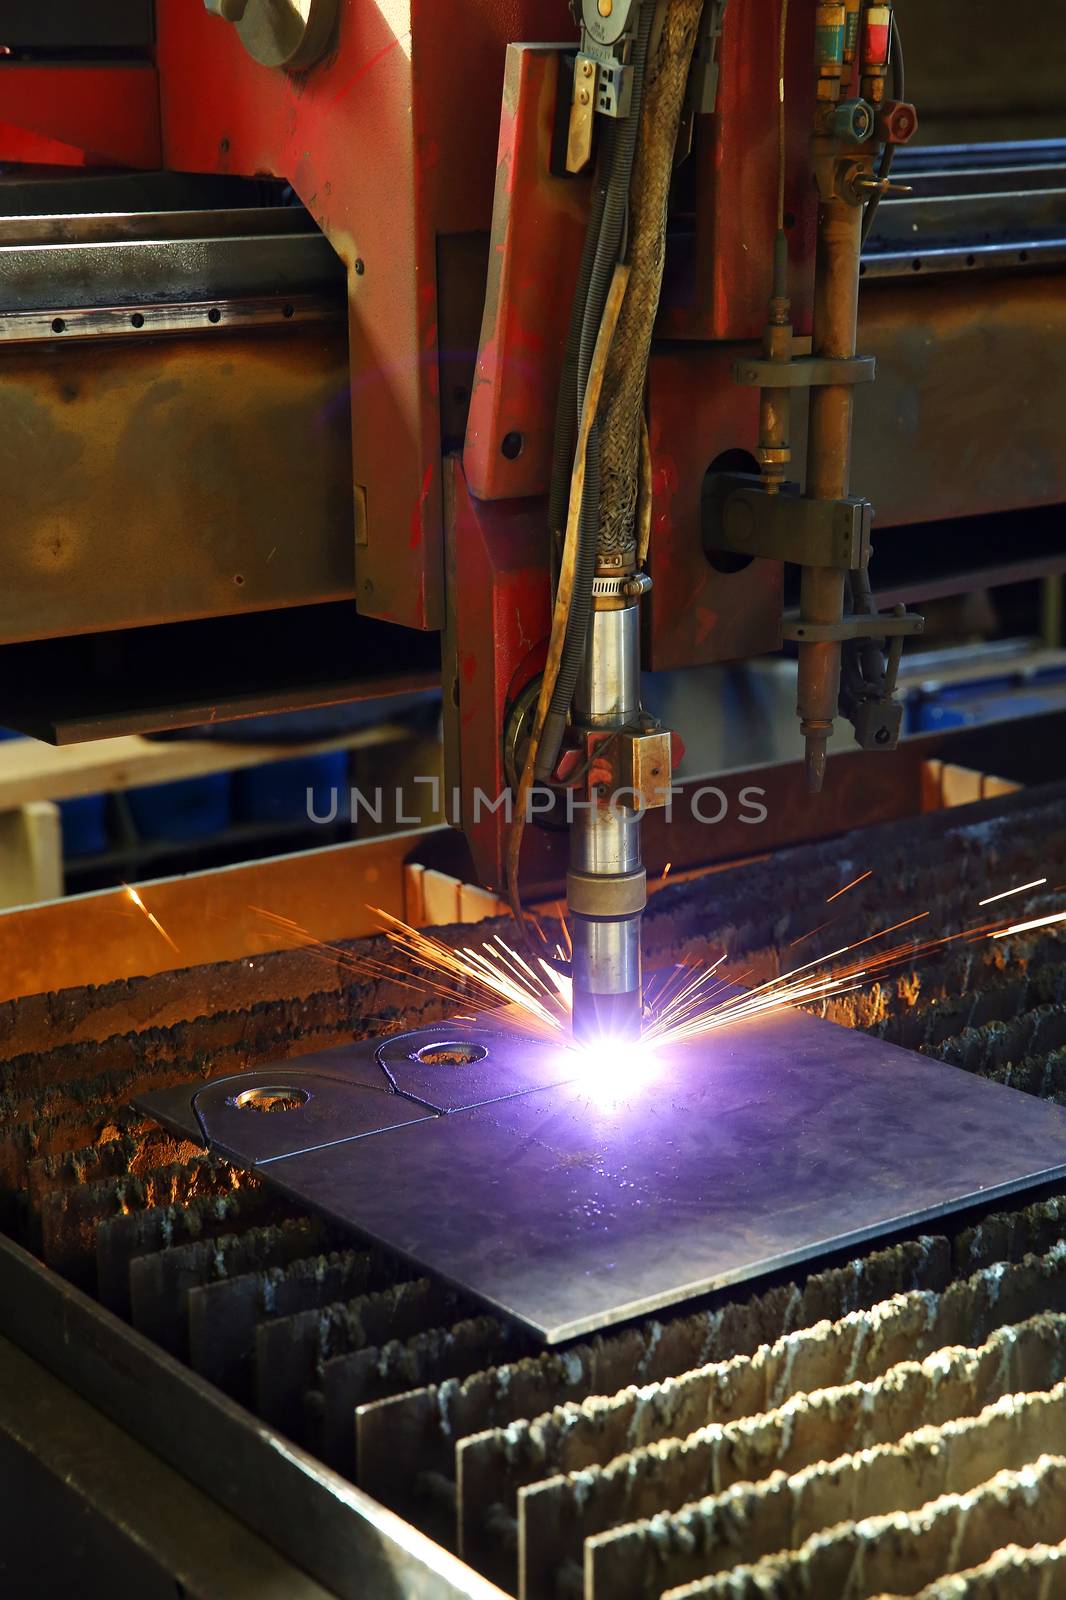 Industrial cnc plasma cutting of metal plate. Closeup by sergasx